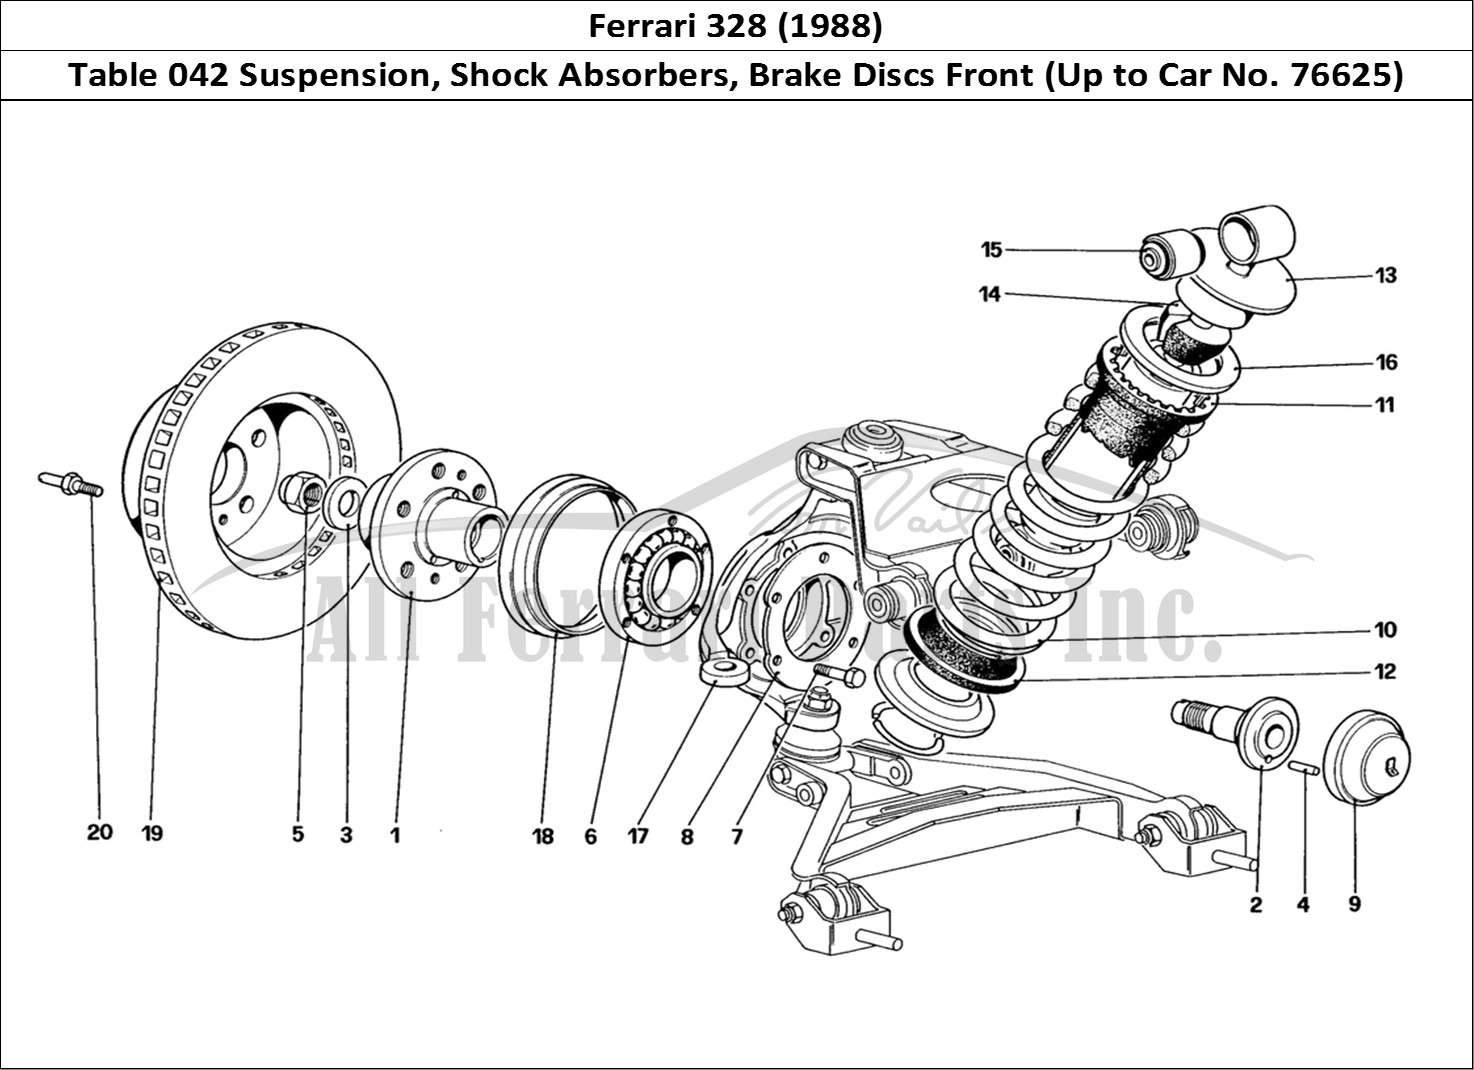 Ferrari Parts Ferrari 328 (1988) Page 042 Front Suspension - Shock